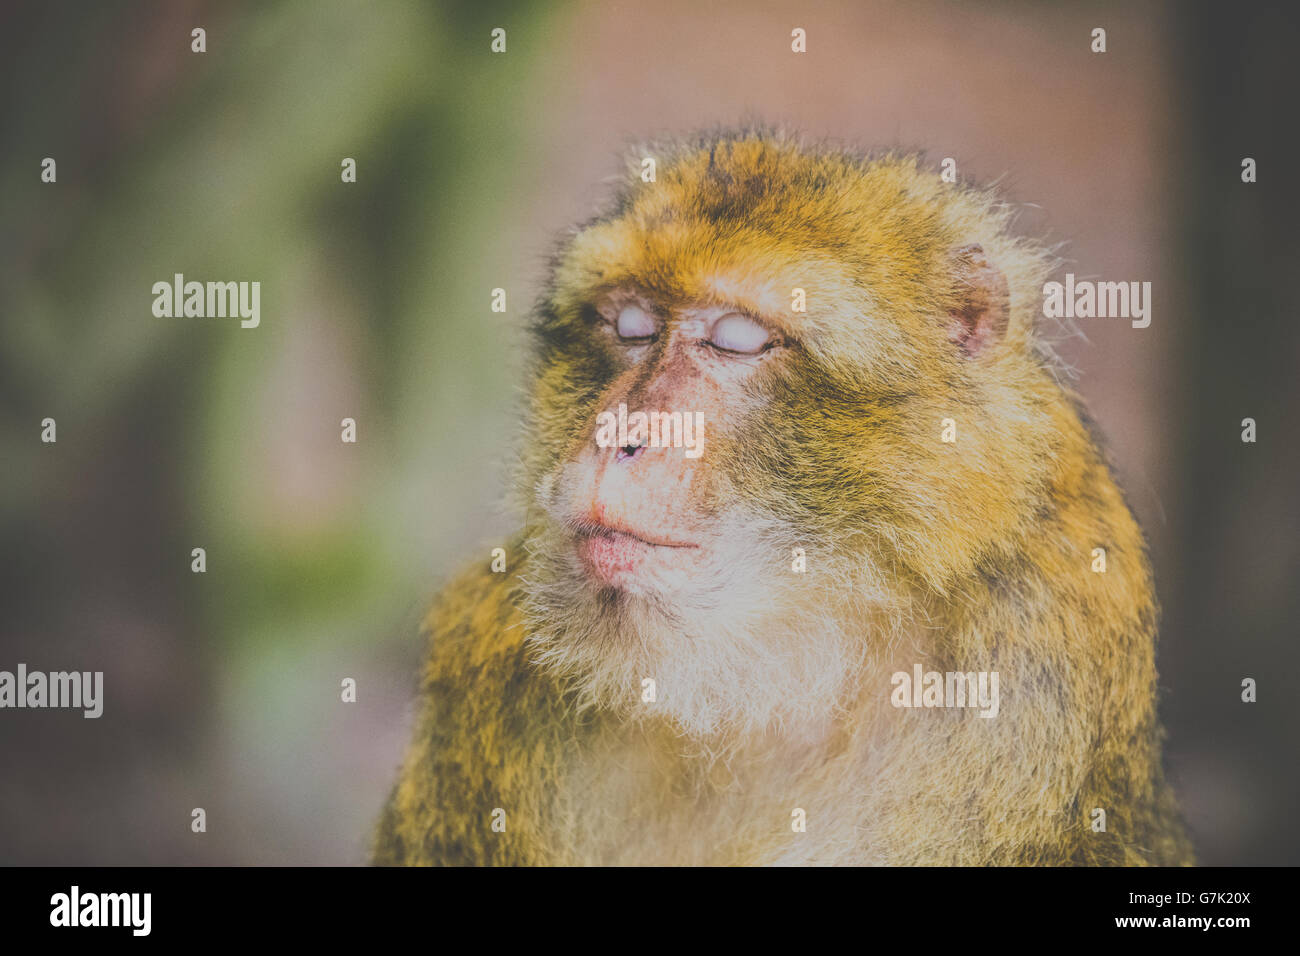 Monkey portrait with closed eyes Stock Photo